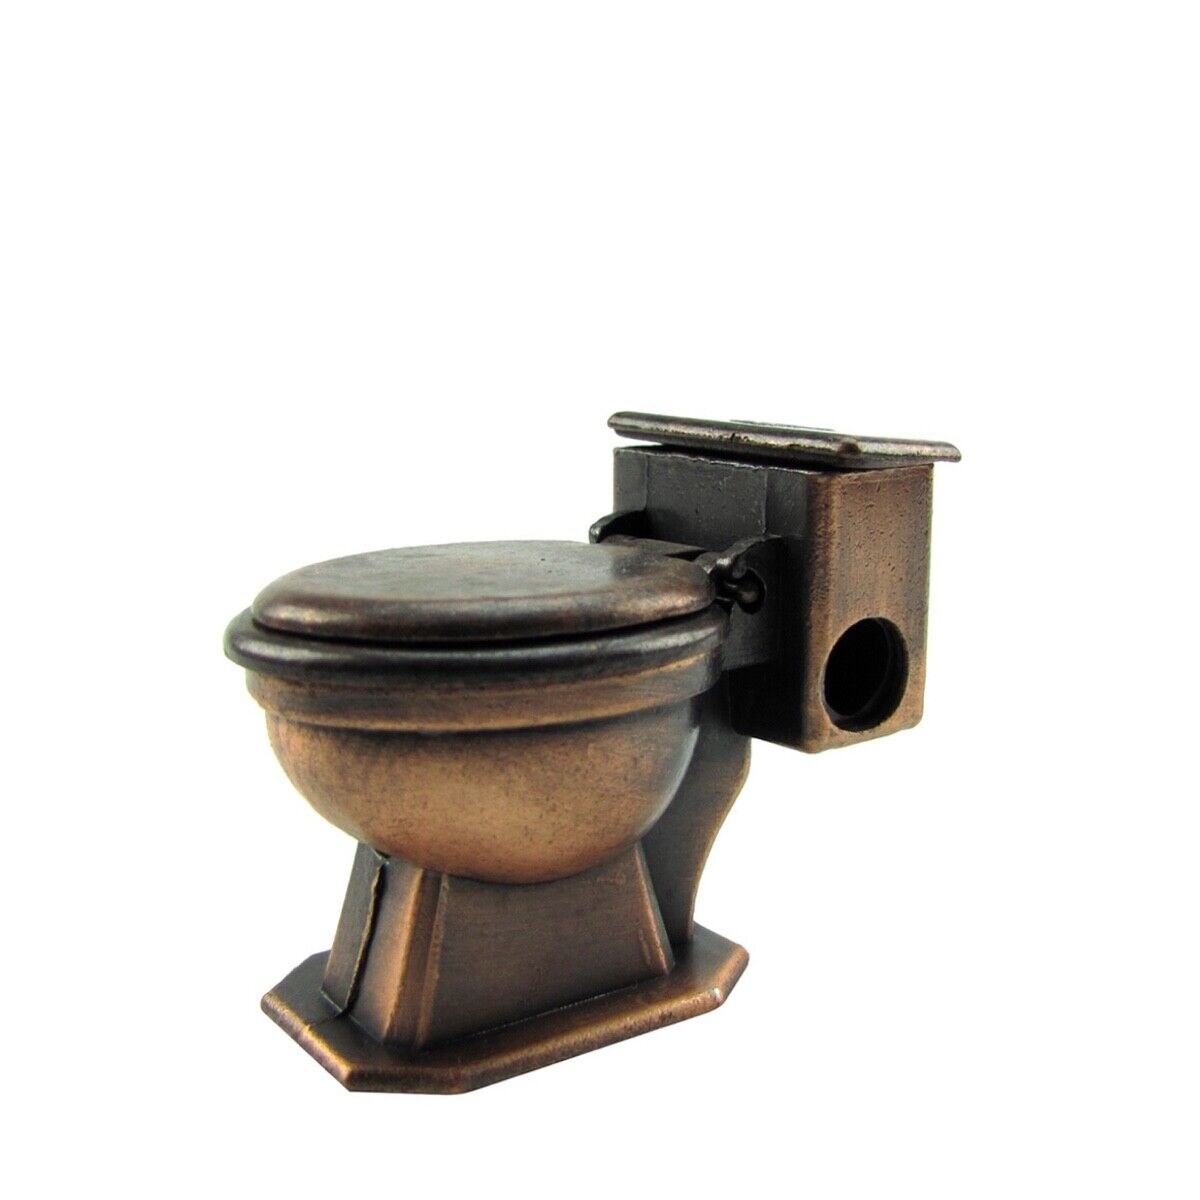 1:12 Scale Metal Toilet Dollhouse Miniature Accessory Die Cast Pencil Sharpener